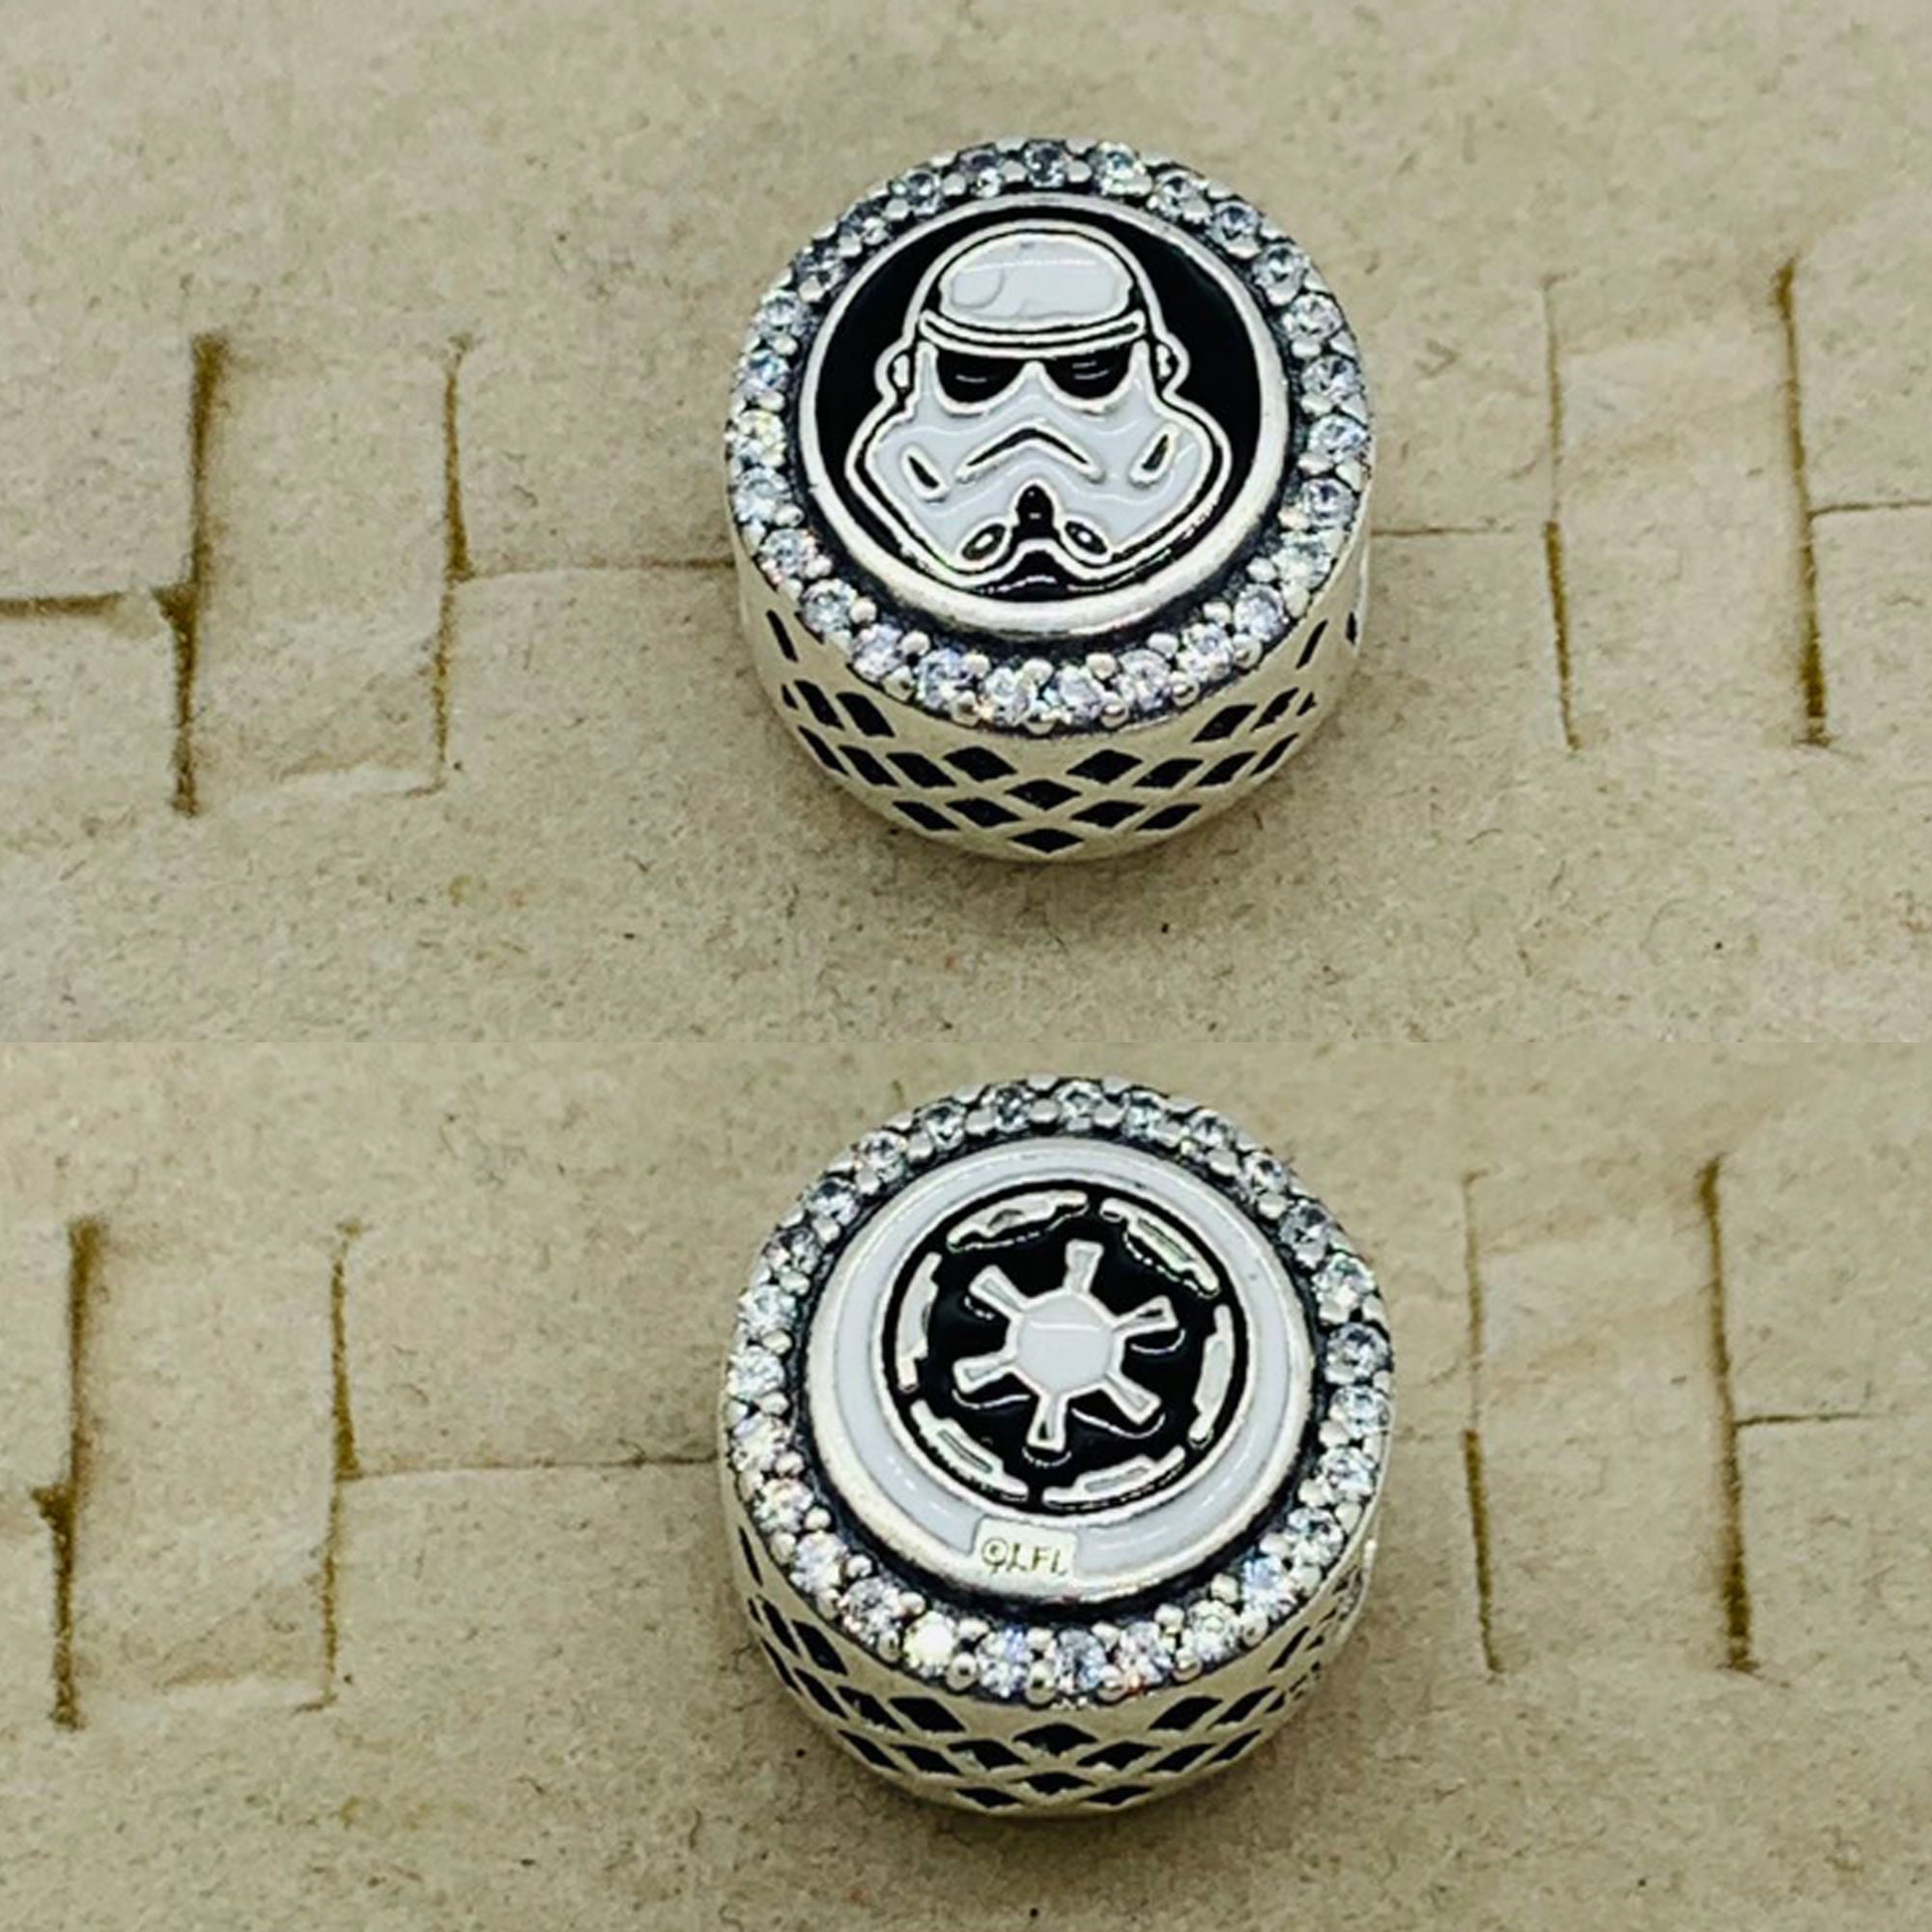 Star Wars: Stormtrooper Charm Bracelet 316 Stainless Steel - Trustmark  Jewelers